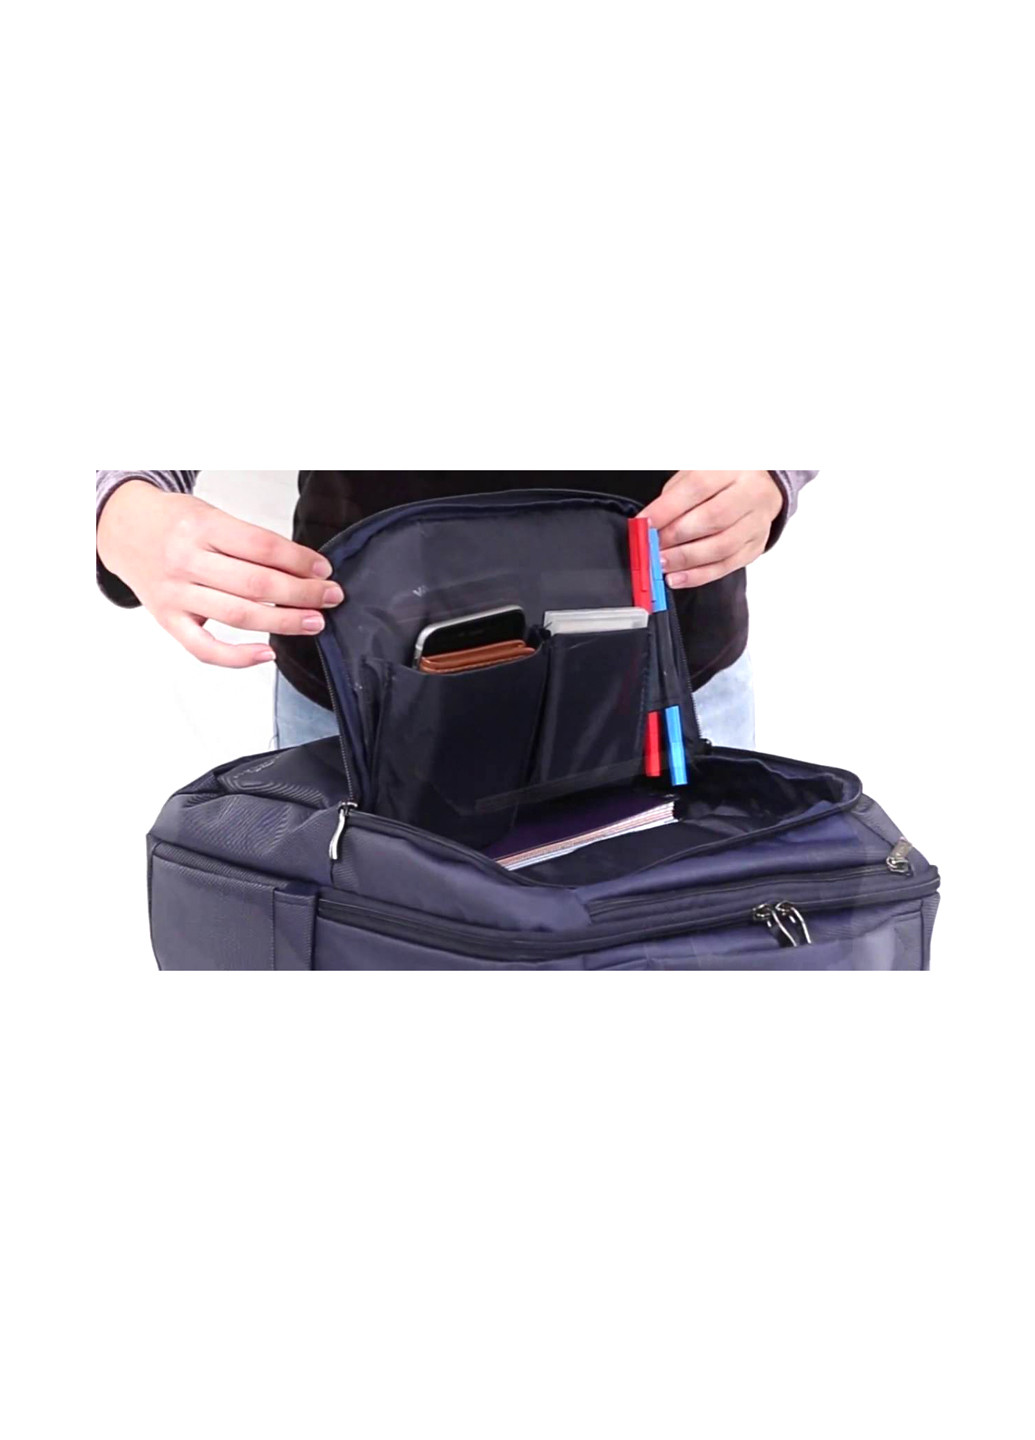 Рюкзак для ноутбука RIVACASE 8262 (blue) (132506405)